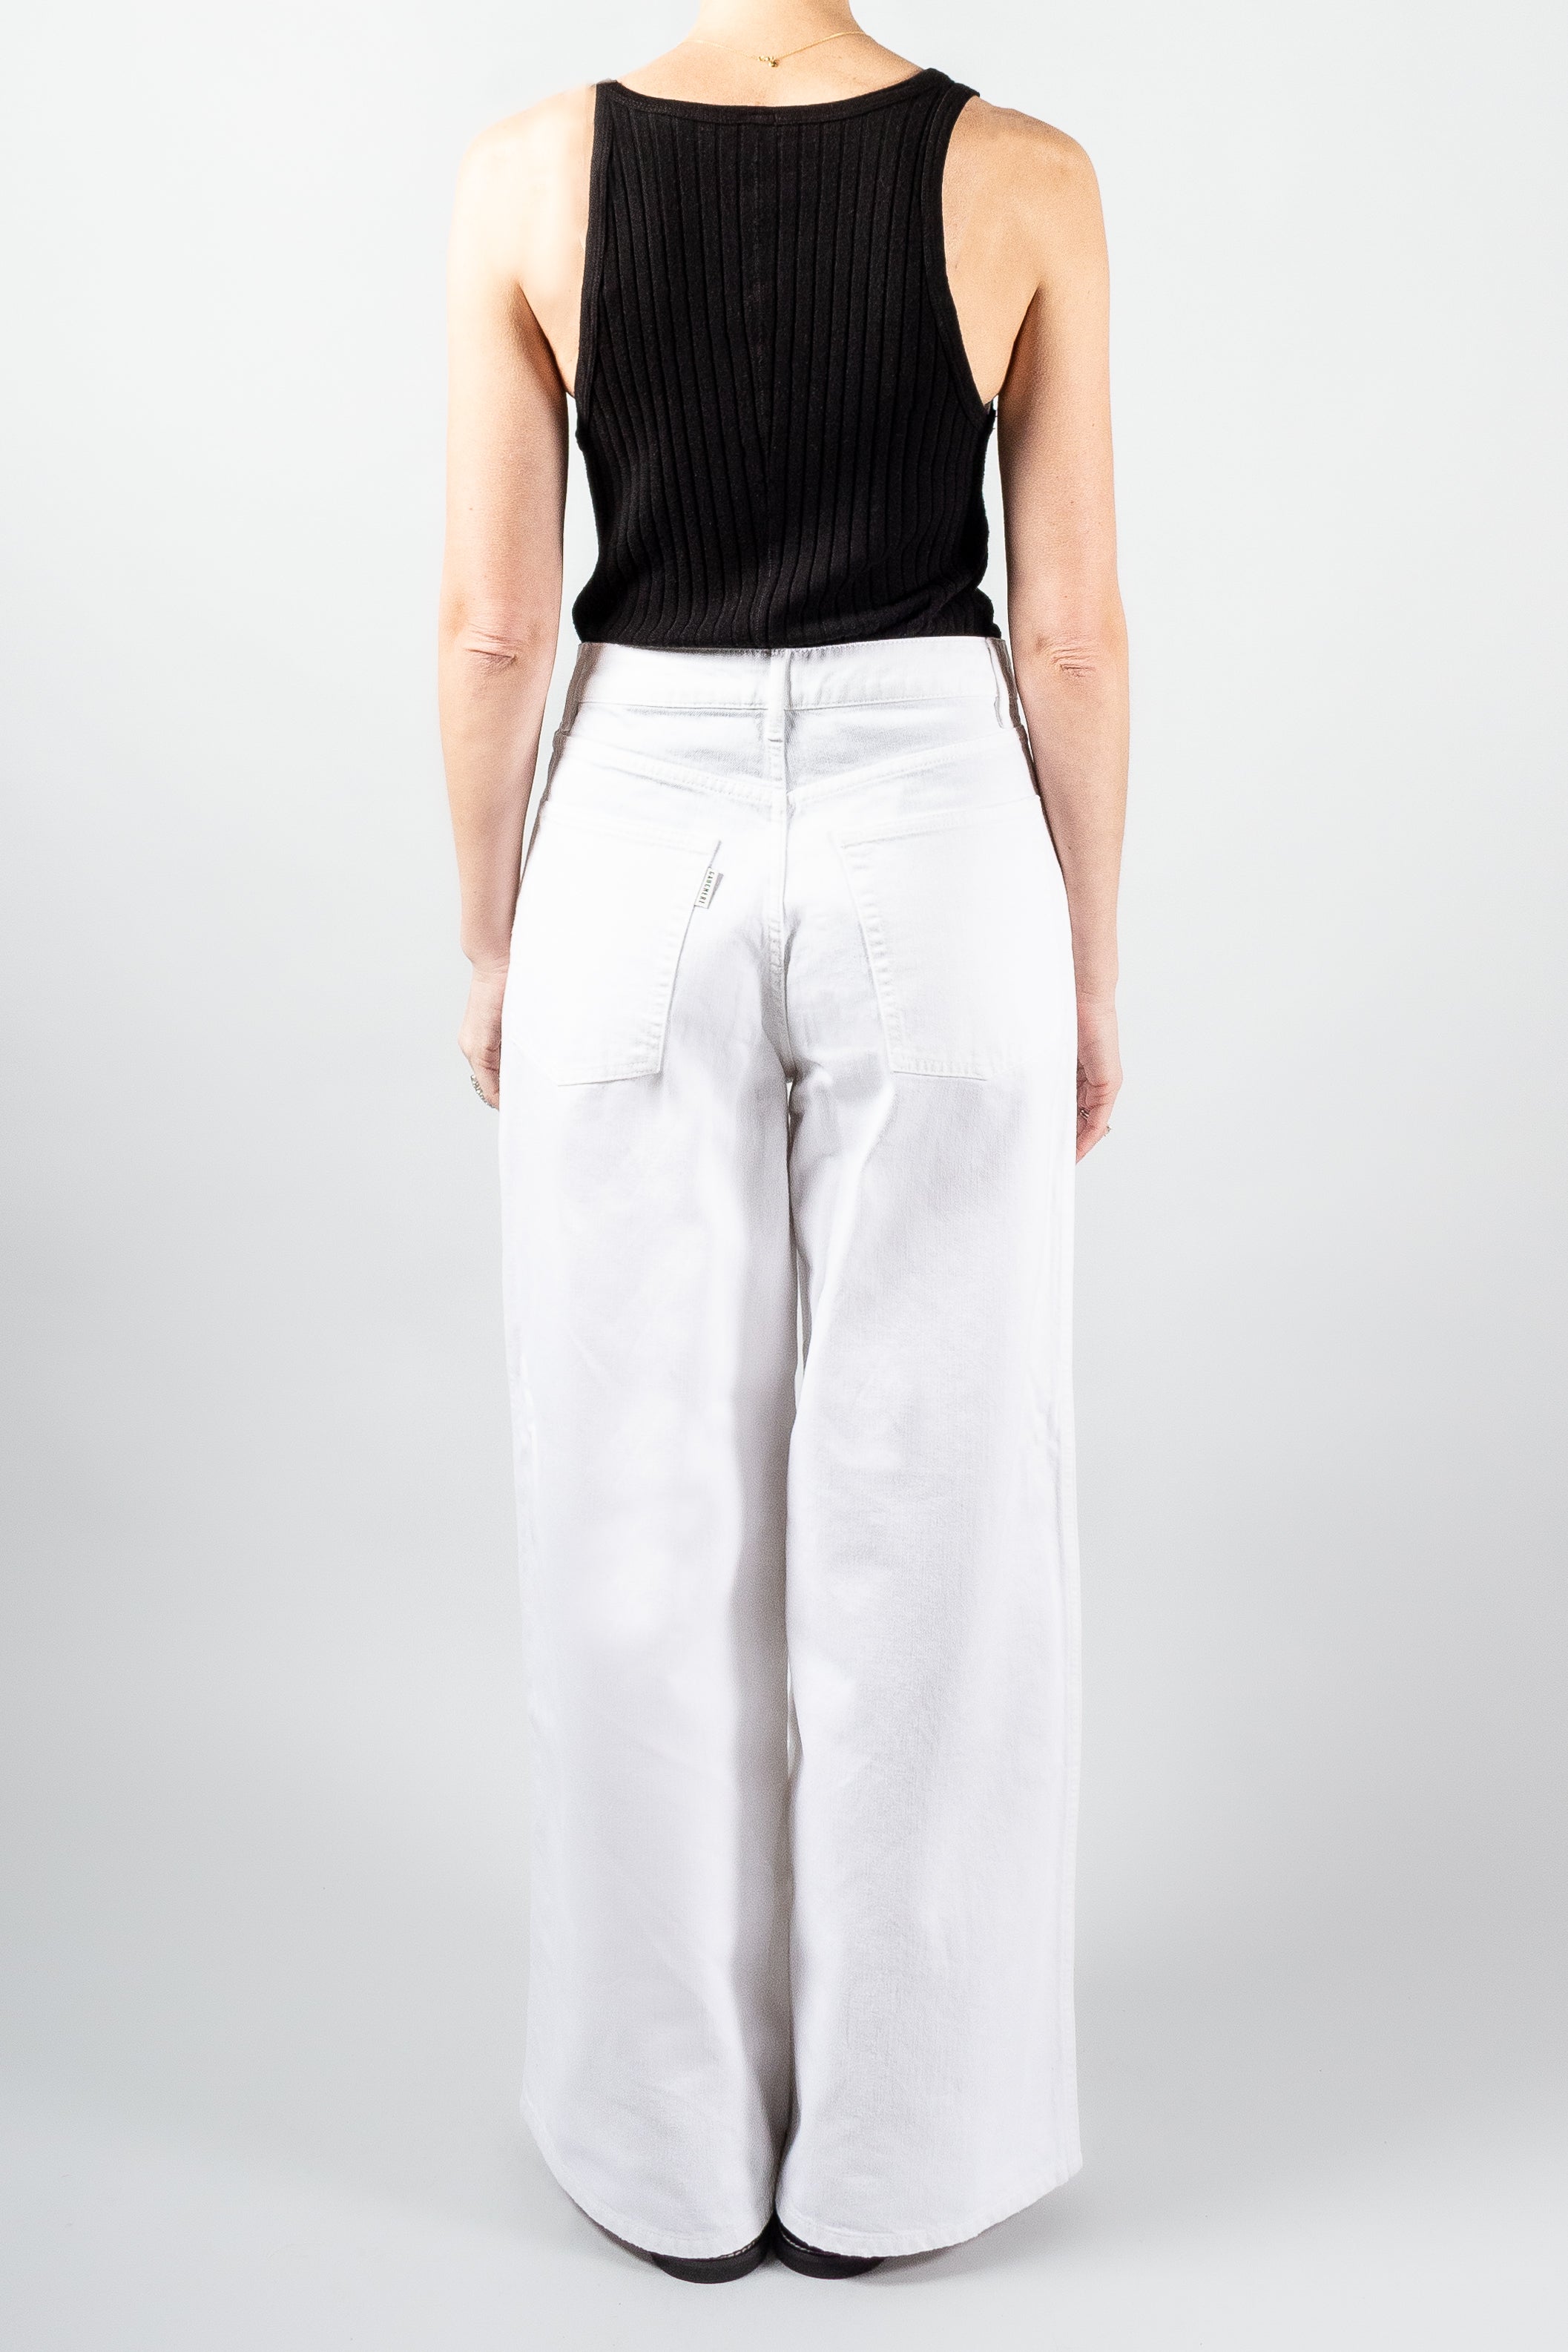 Gauchere White Denim-Pants and Shorts-Misch-Boutique-Vancouver-Canada-misch.ca